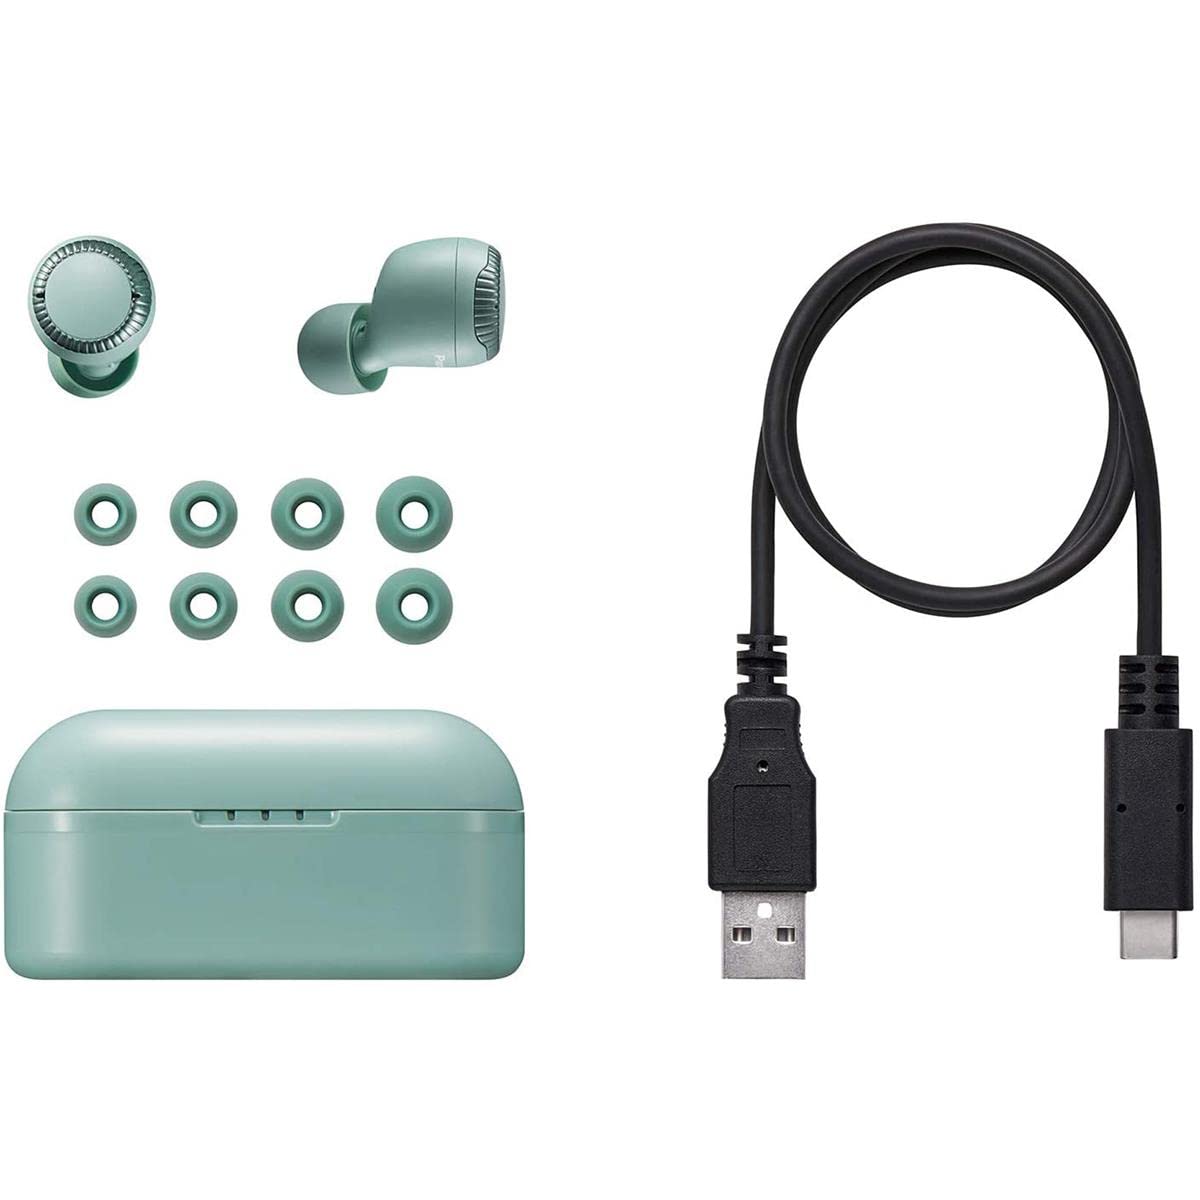 Panasonic True Wireless Earbuds | Bluetooth Earbuds|IPX4 Water Resistant | Small, Lightweight | Long Battery Life, Alexa Compatible | RZ-S300W (Green)